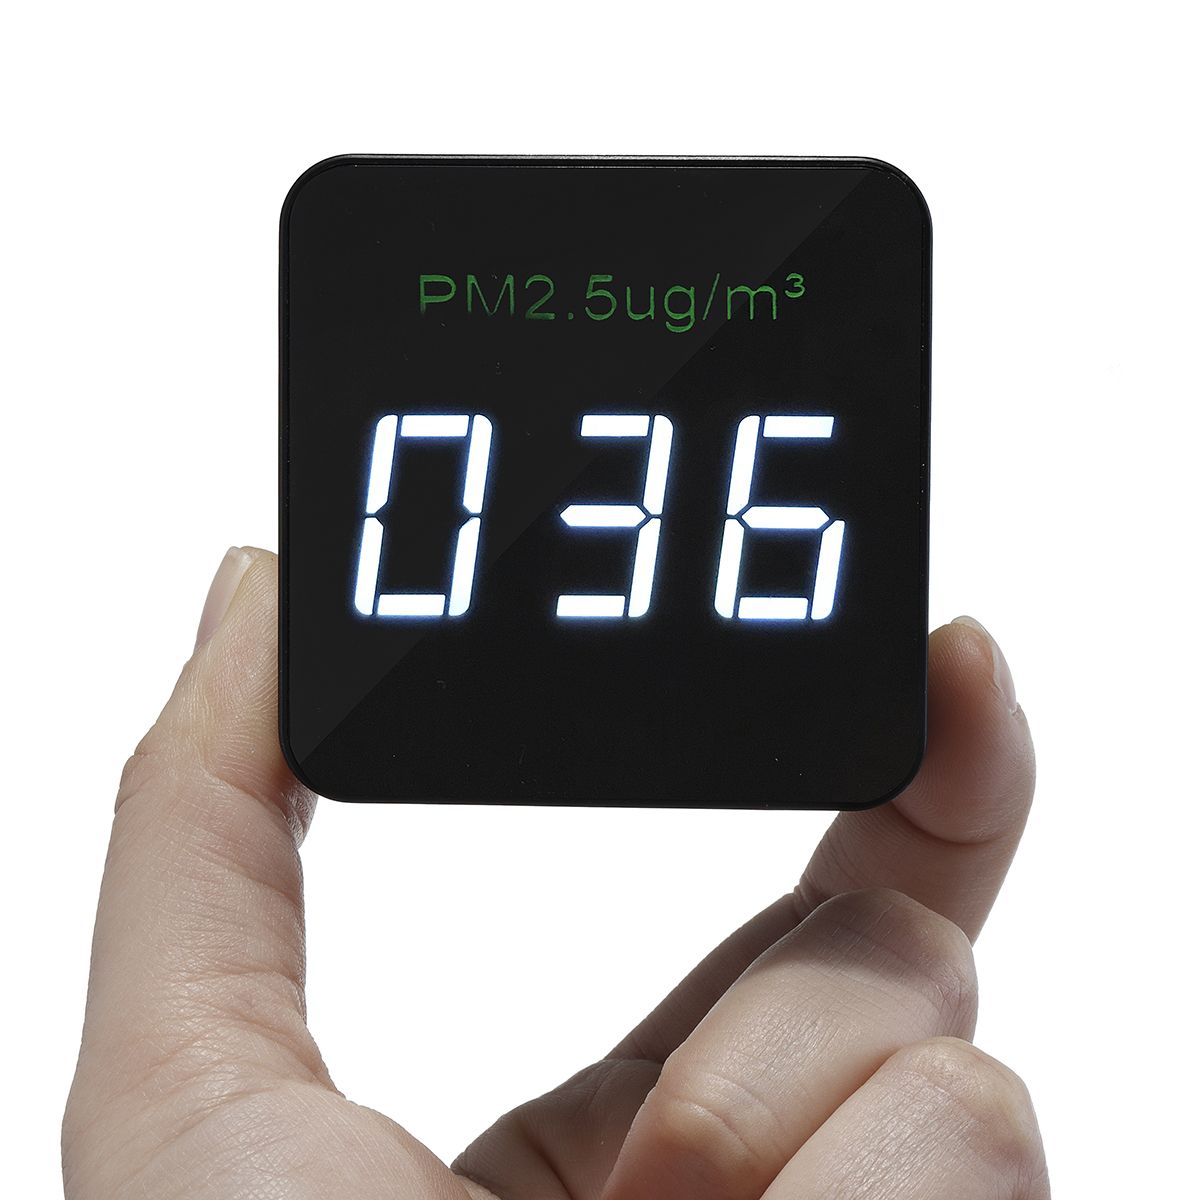 Portable-Digital-PM25-Detector-Air-Quality-Monitor-Meter-Tester-1469906